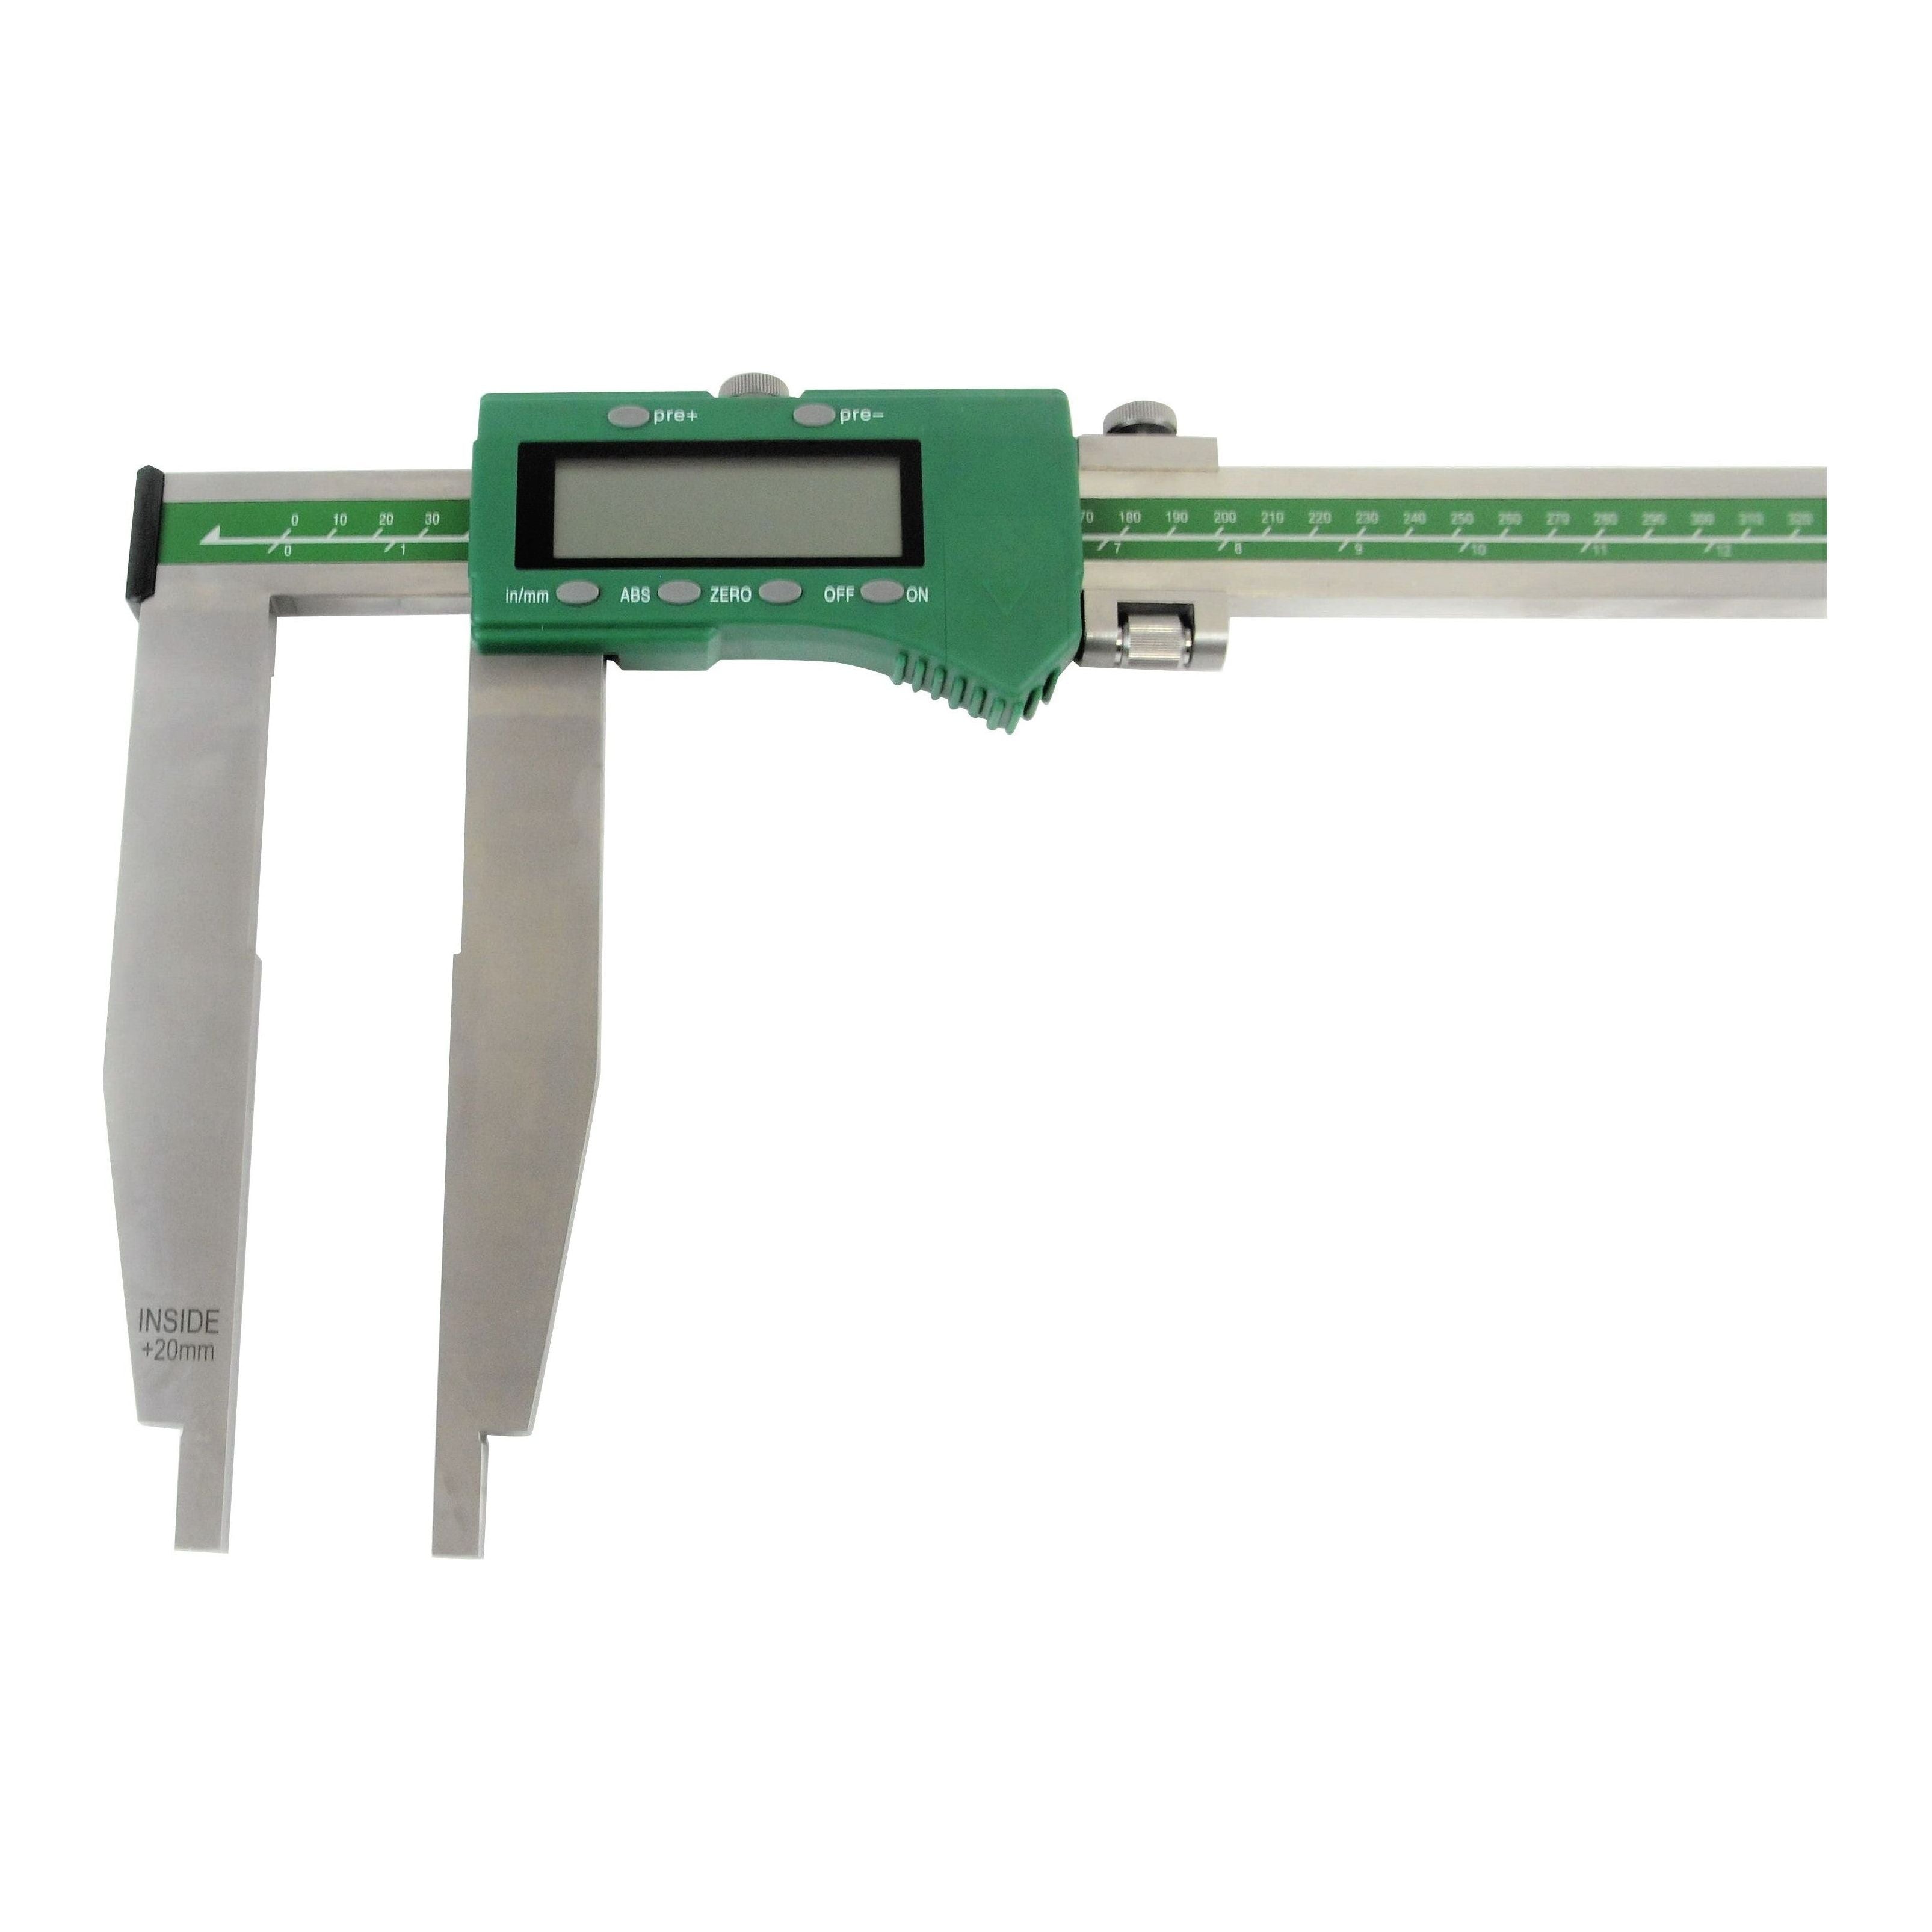 Insize Long Jaw Digital Caliper  0-500mm / 0-20" Range Series 1106-503